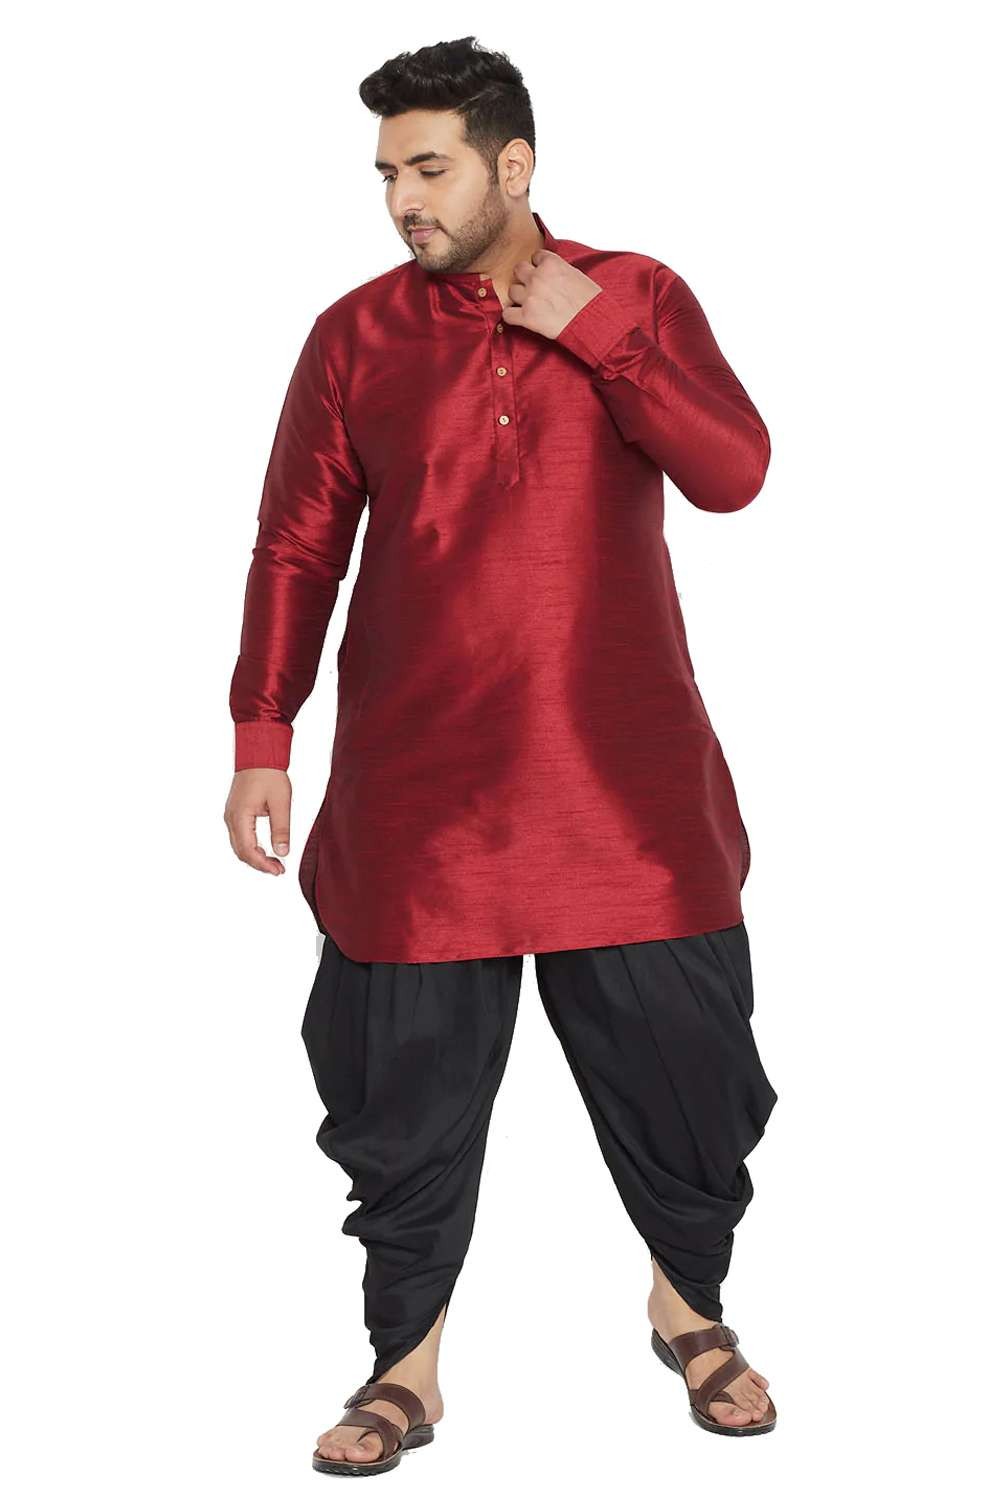 Indian Kurta Pyjama,mens Kurta Pyjama,kurta for Diwali,diwali Dress for Men,indian  Ethnic Kurta Pyjama,indian Wedding Dress,indian Ethnic - Etsy